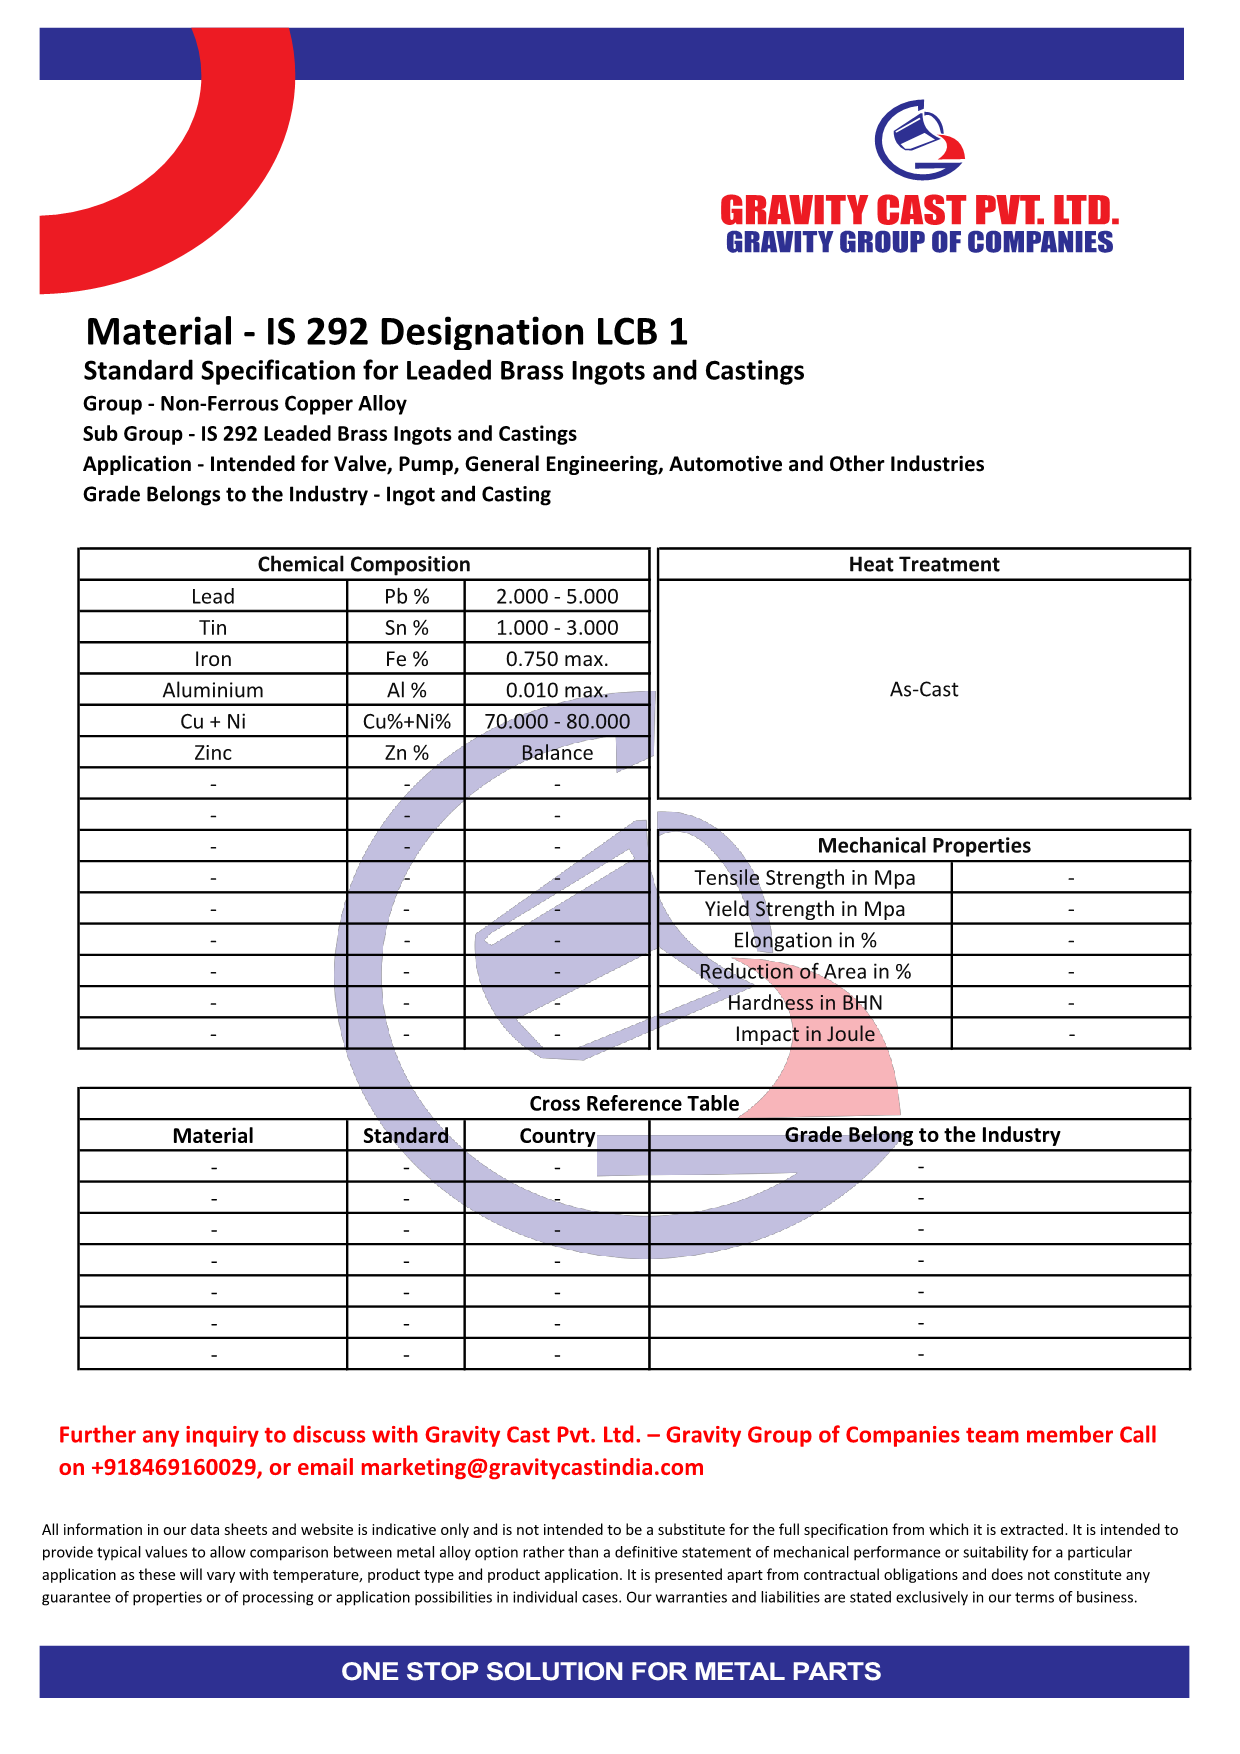 IS 292 Designation LCB 1.pdf